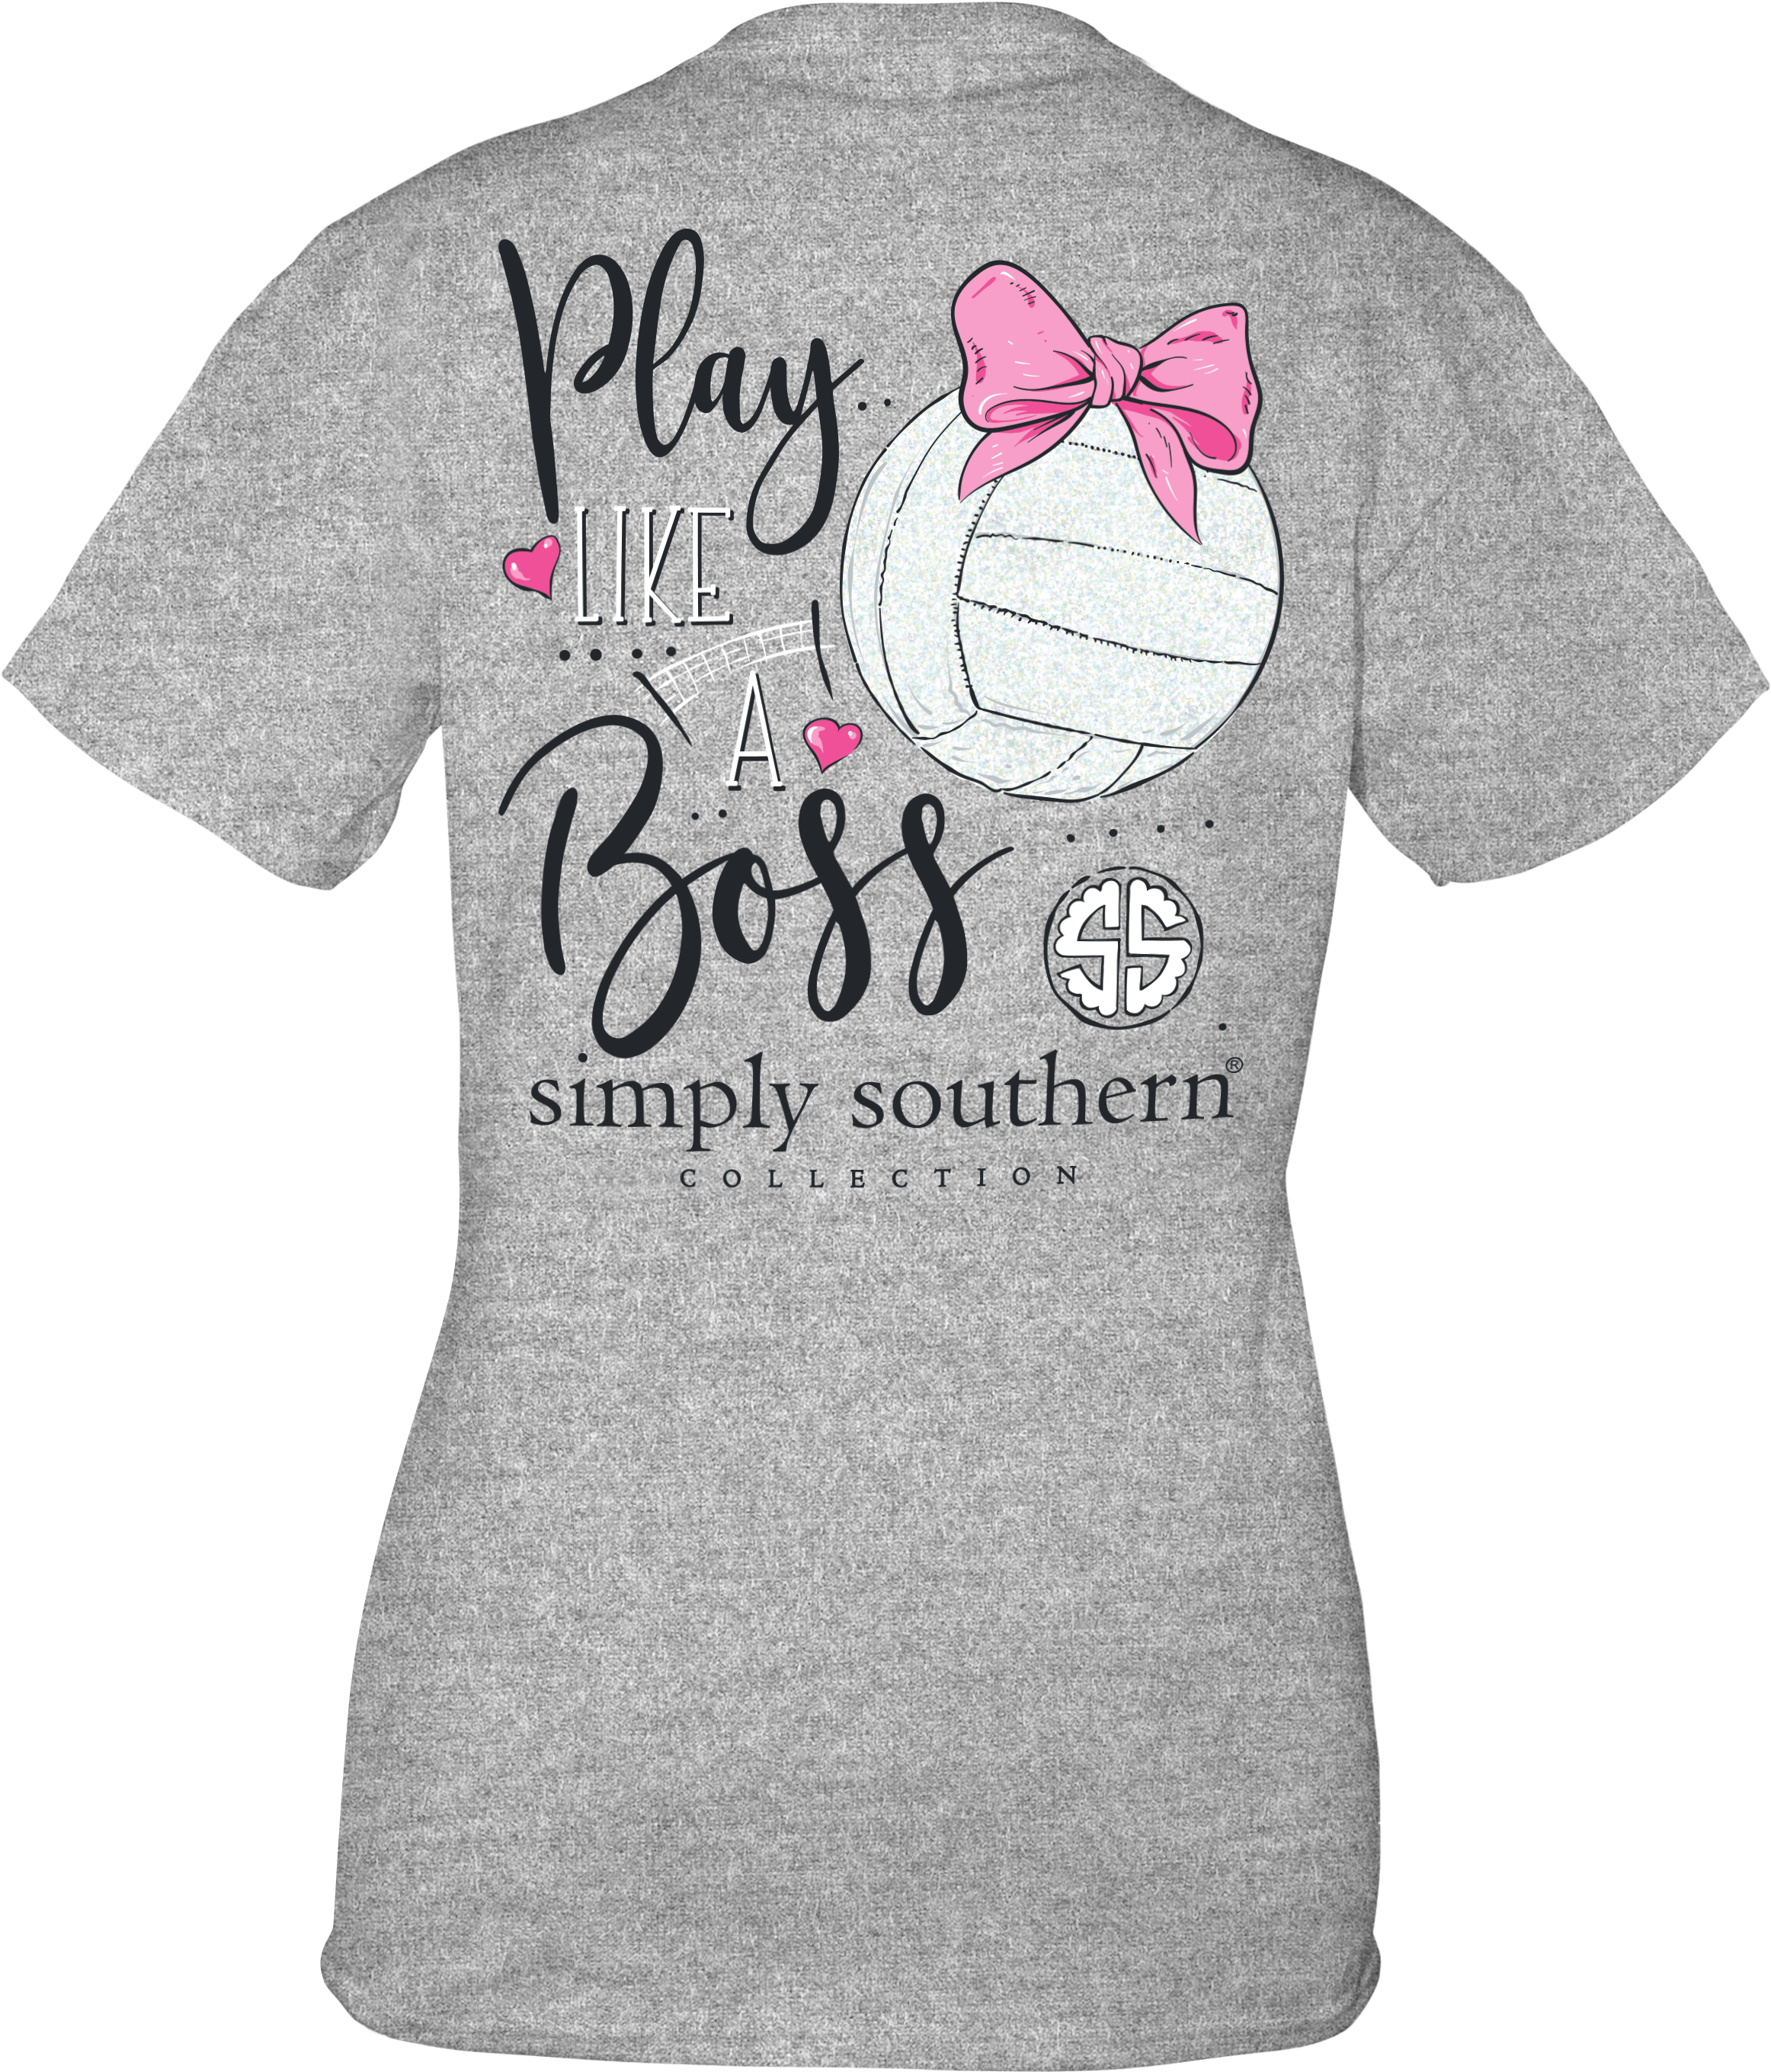 play like a boss simply southern shirt